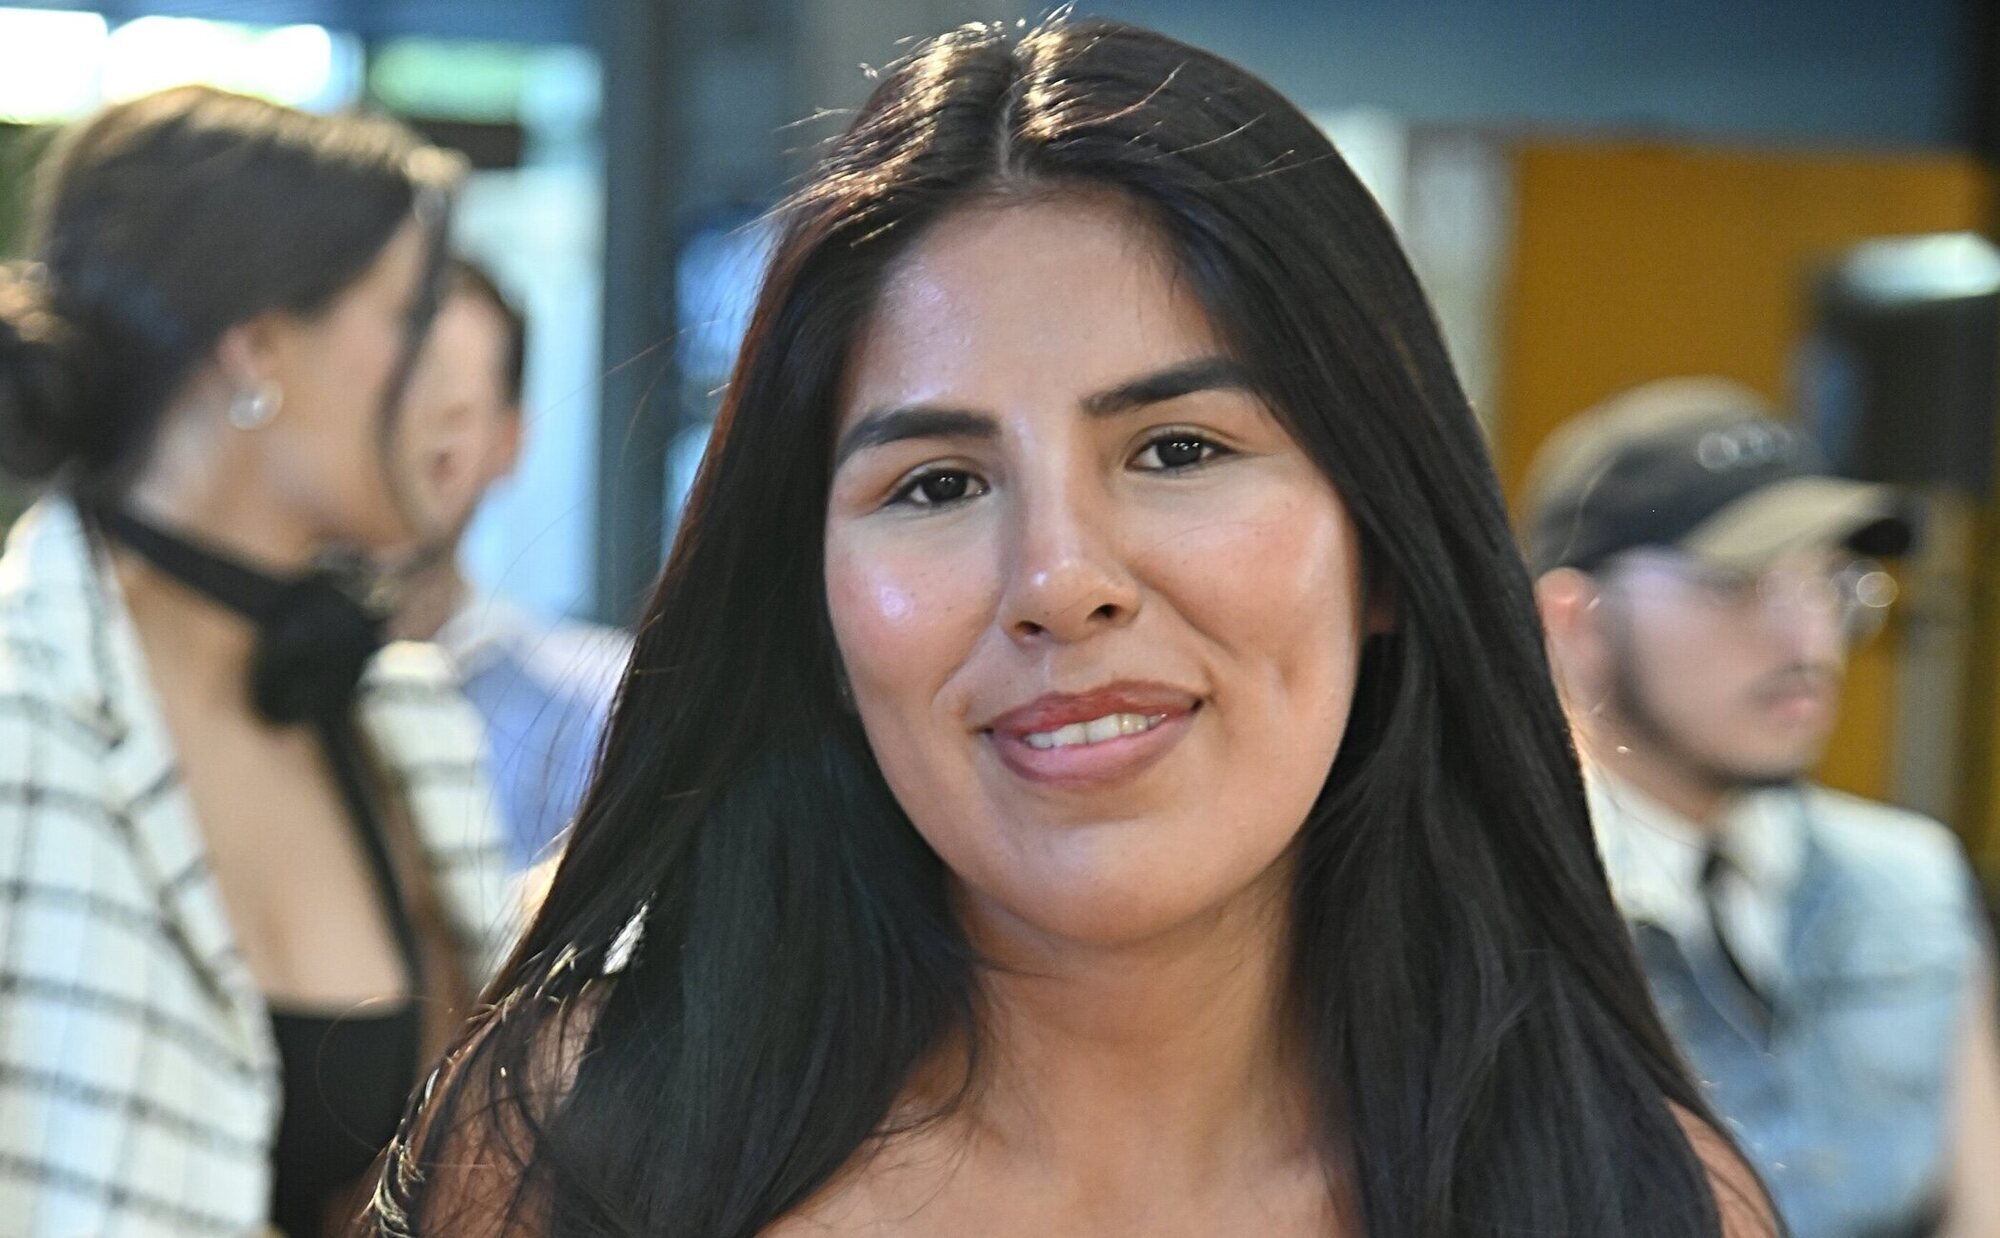 Roxana Luque, madre biológica de Isa Pantoja, viajará a España: "Voy a visitar Cantora"